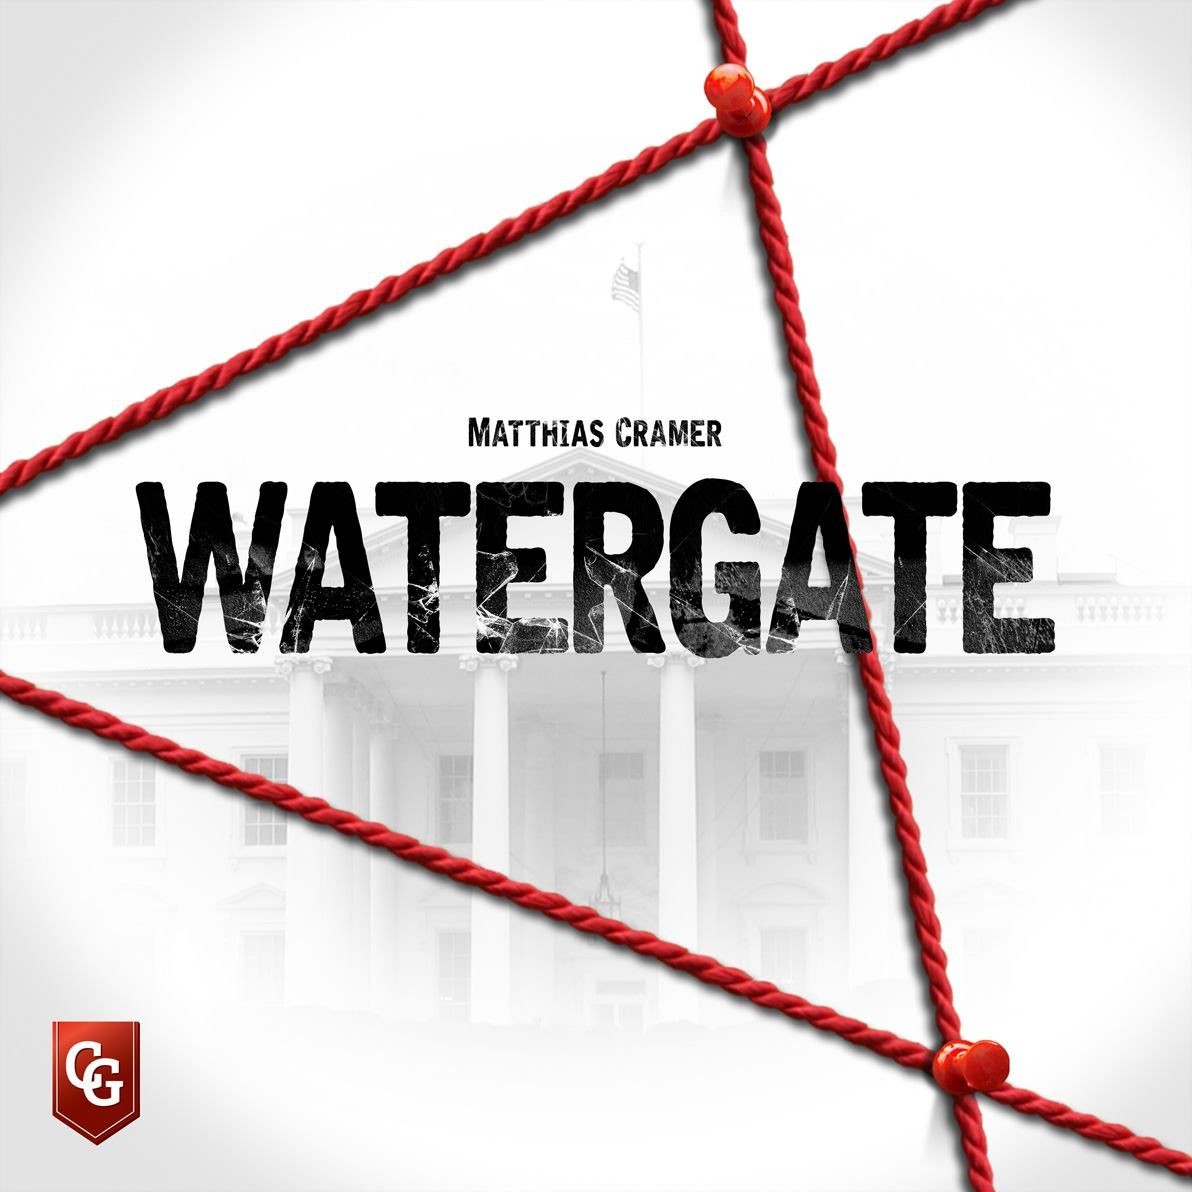 Watergate - White Box Edition